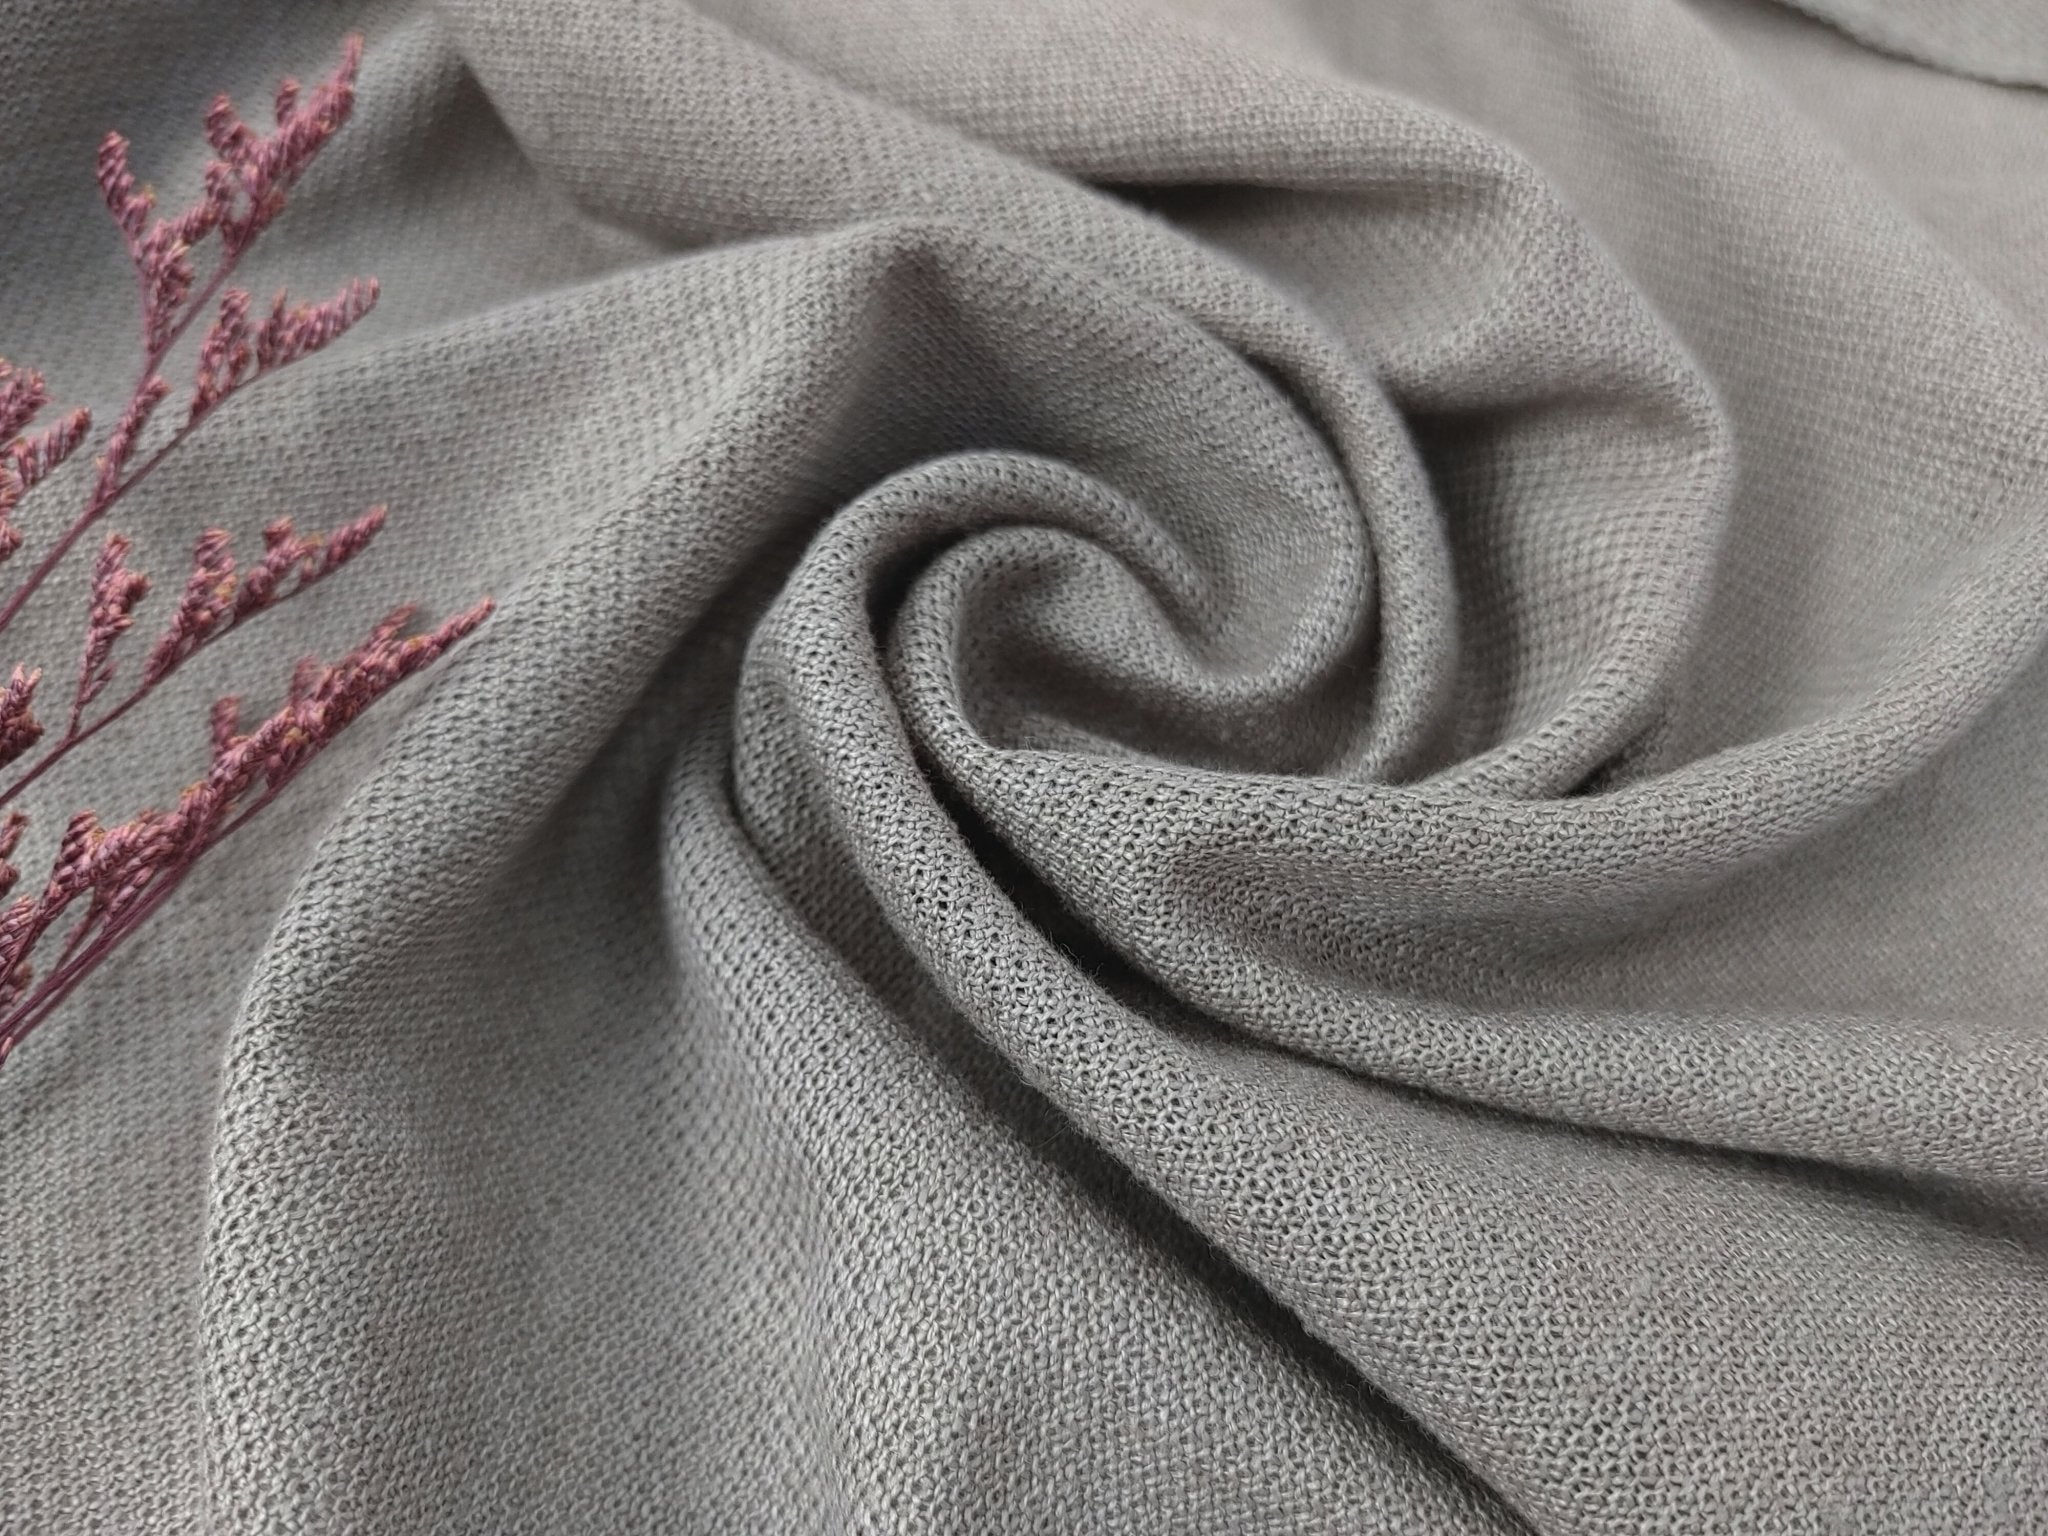 Medium Weight Beige Linen Nylon Knit Fabric 4433 - The Linen Lab - Beige